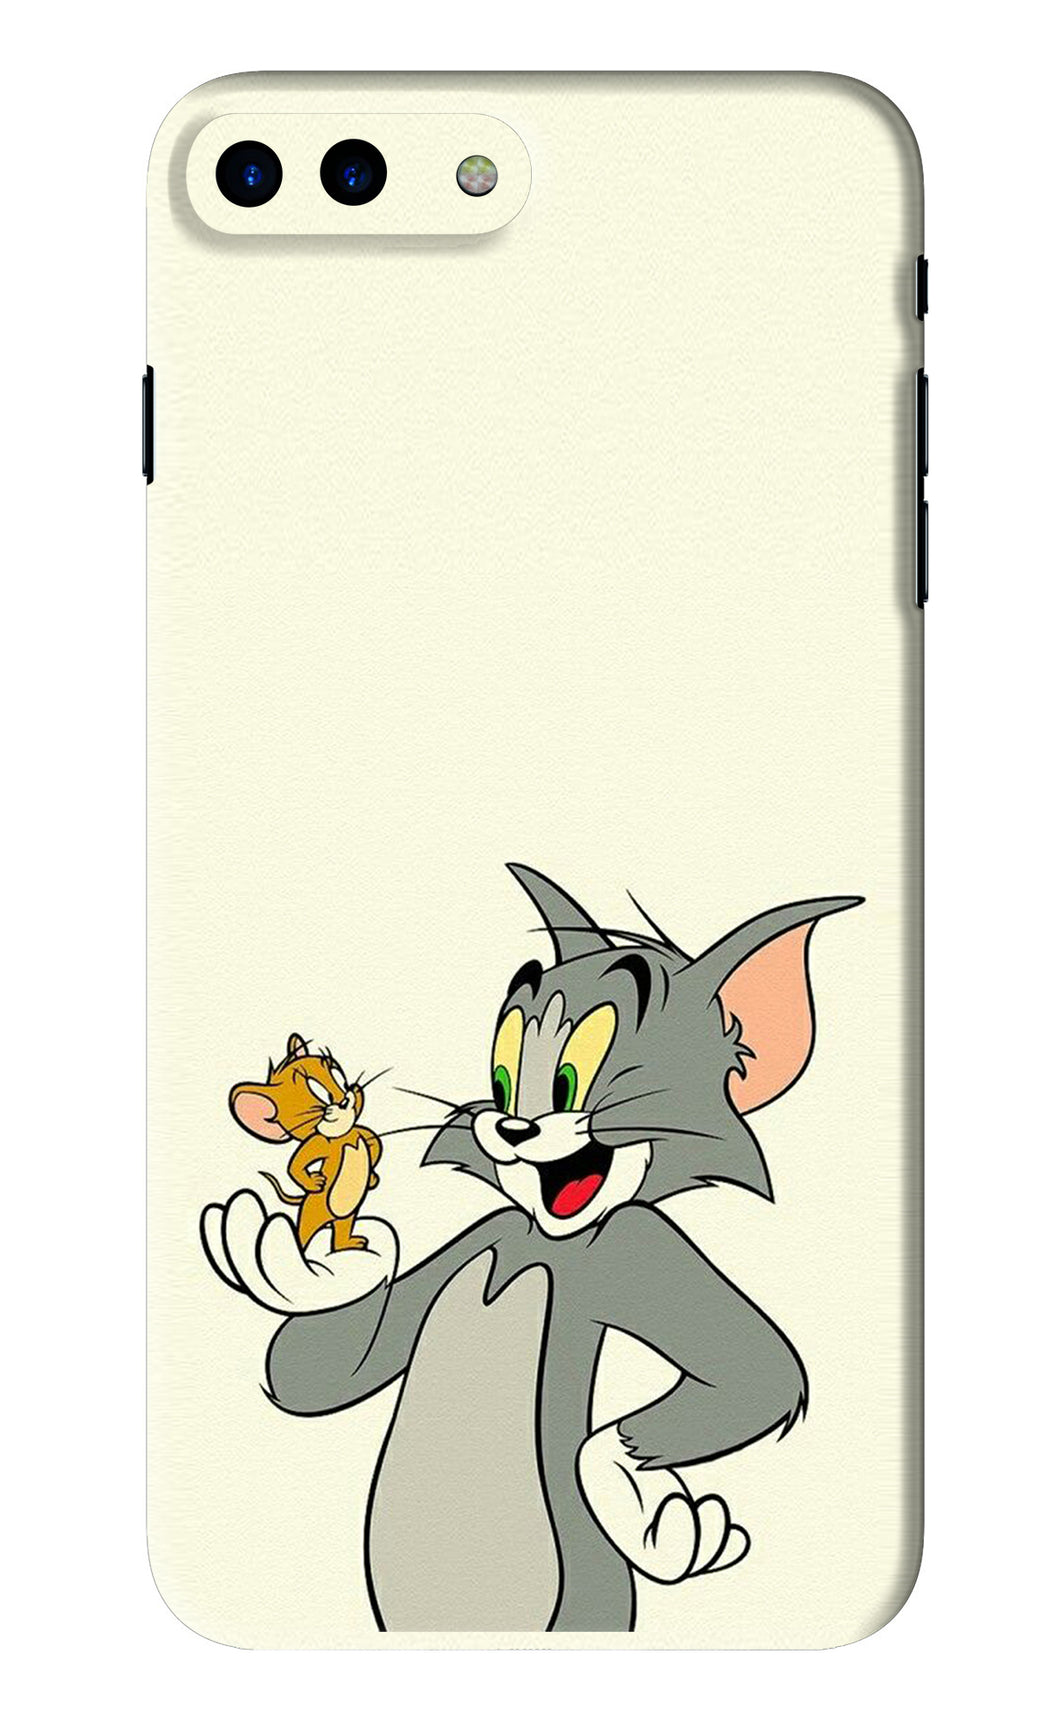 Tom & Jerry iPhone 7 Plus Back Skin Wrap